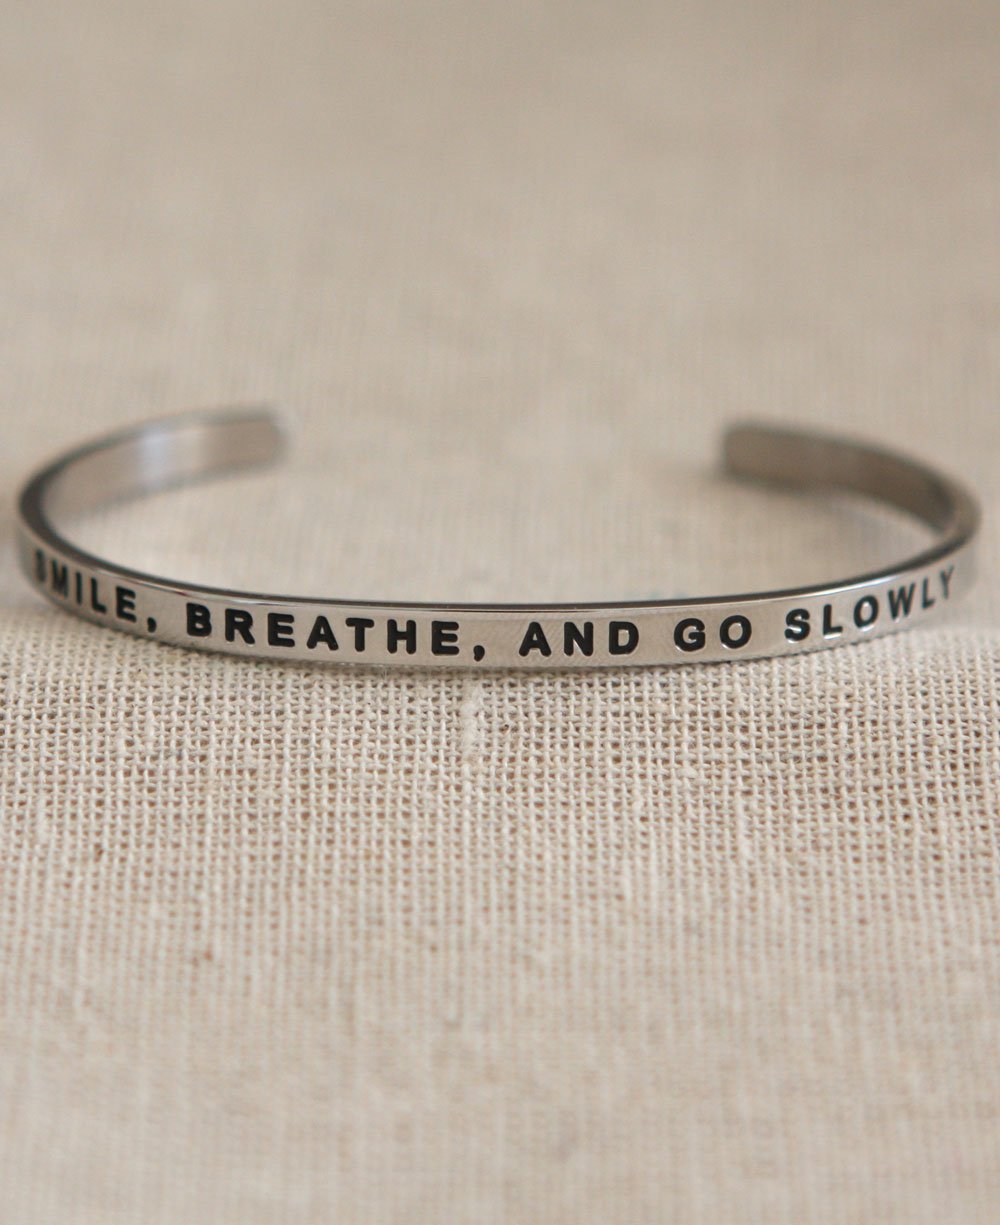 Smile, Breathe, and Go Slowly Metal Cuff Bracelet - Bracelets